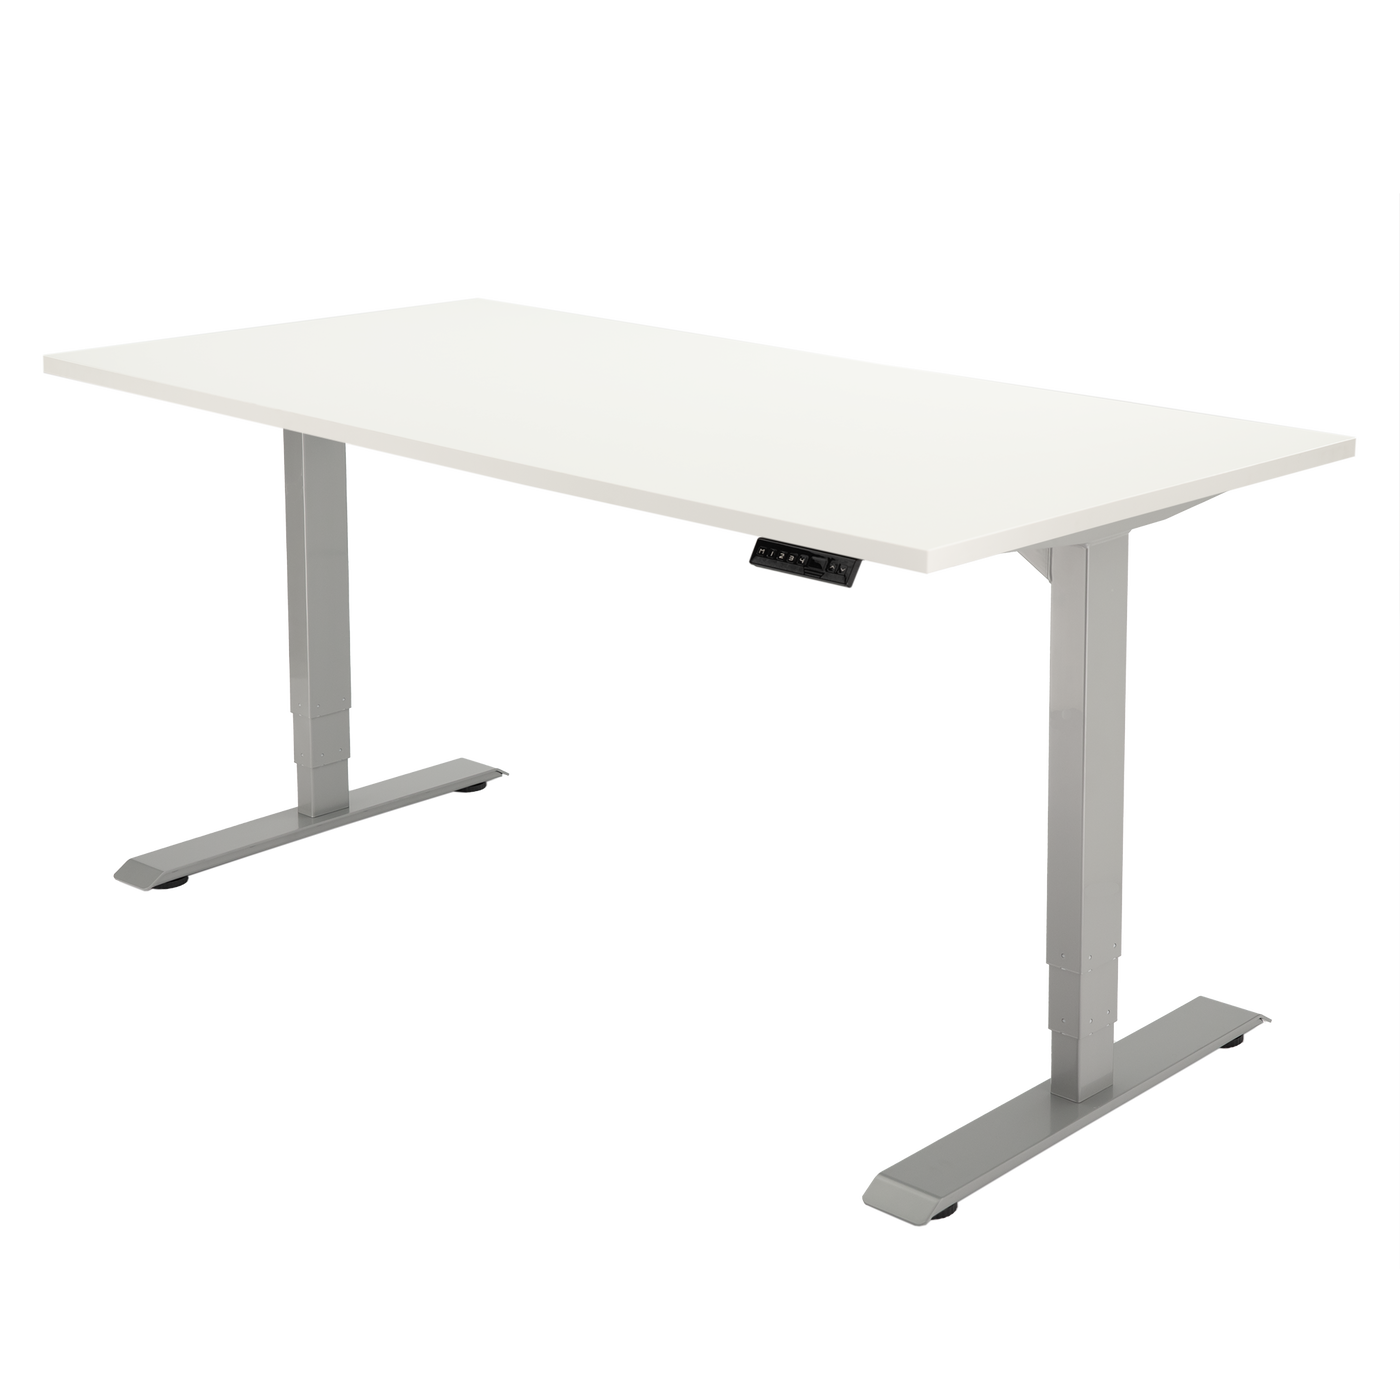 Electric sit-stand desk Aero - EN 527